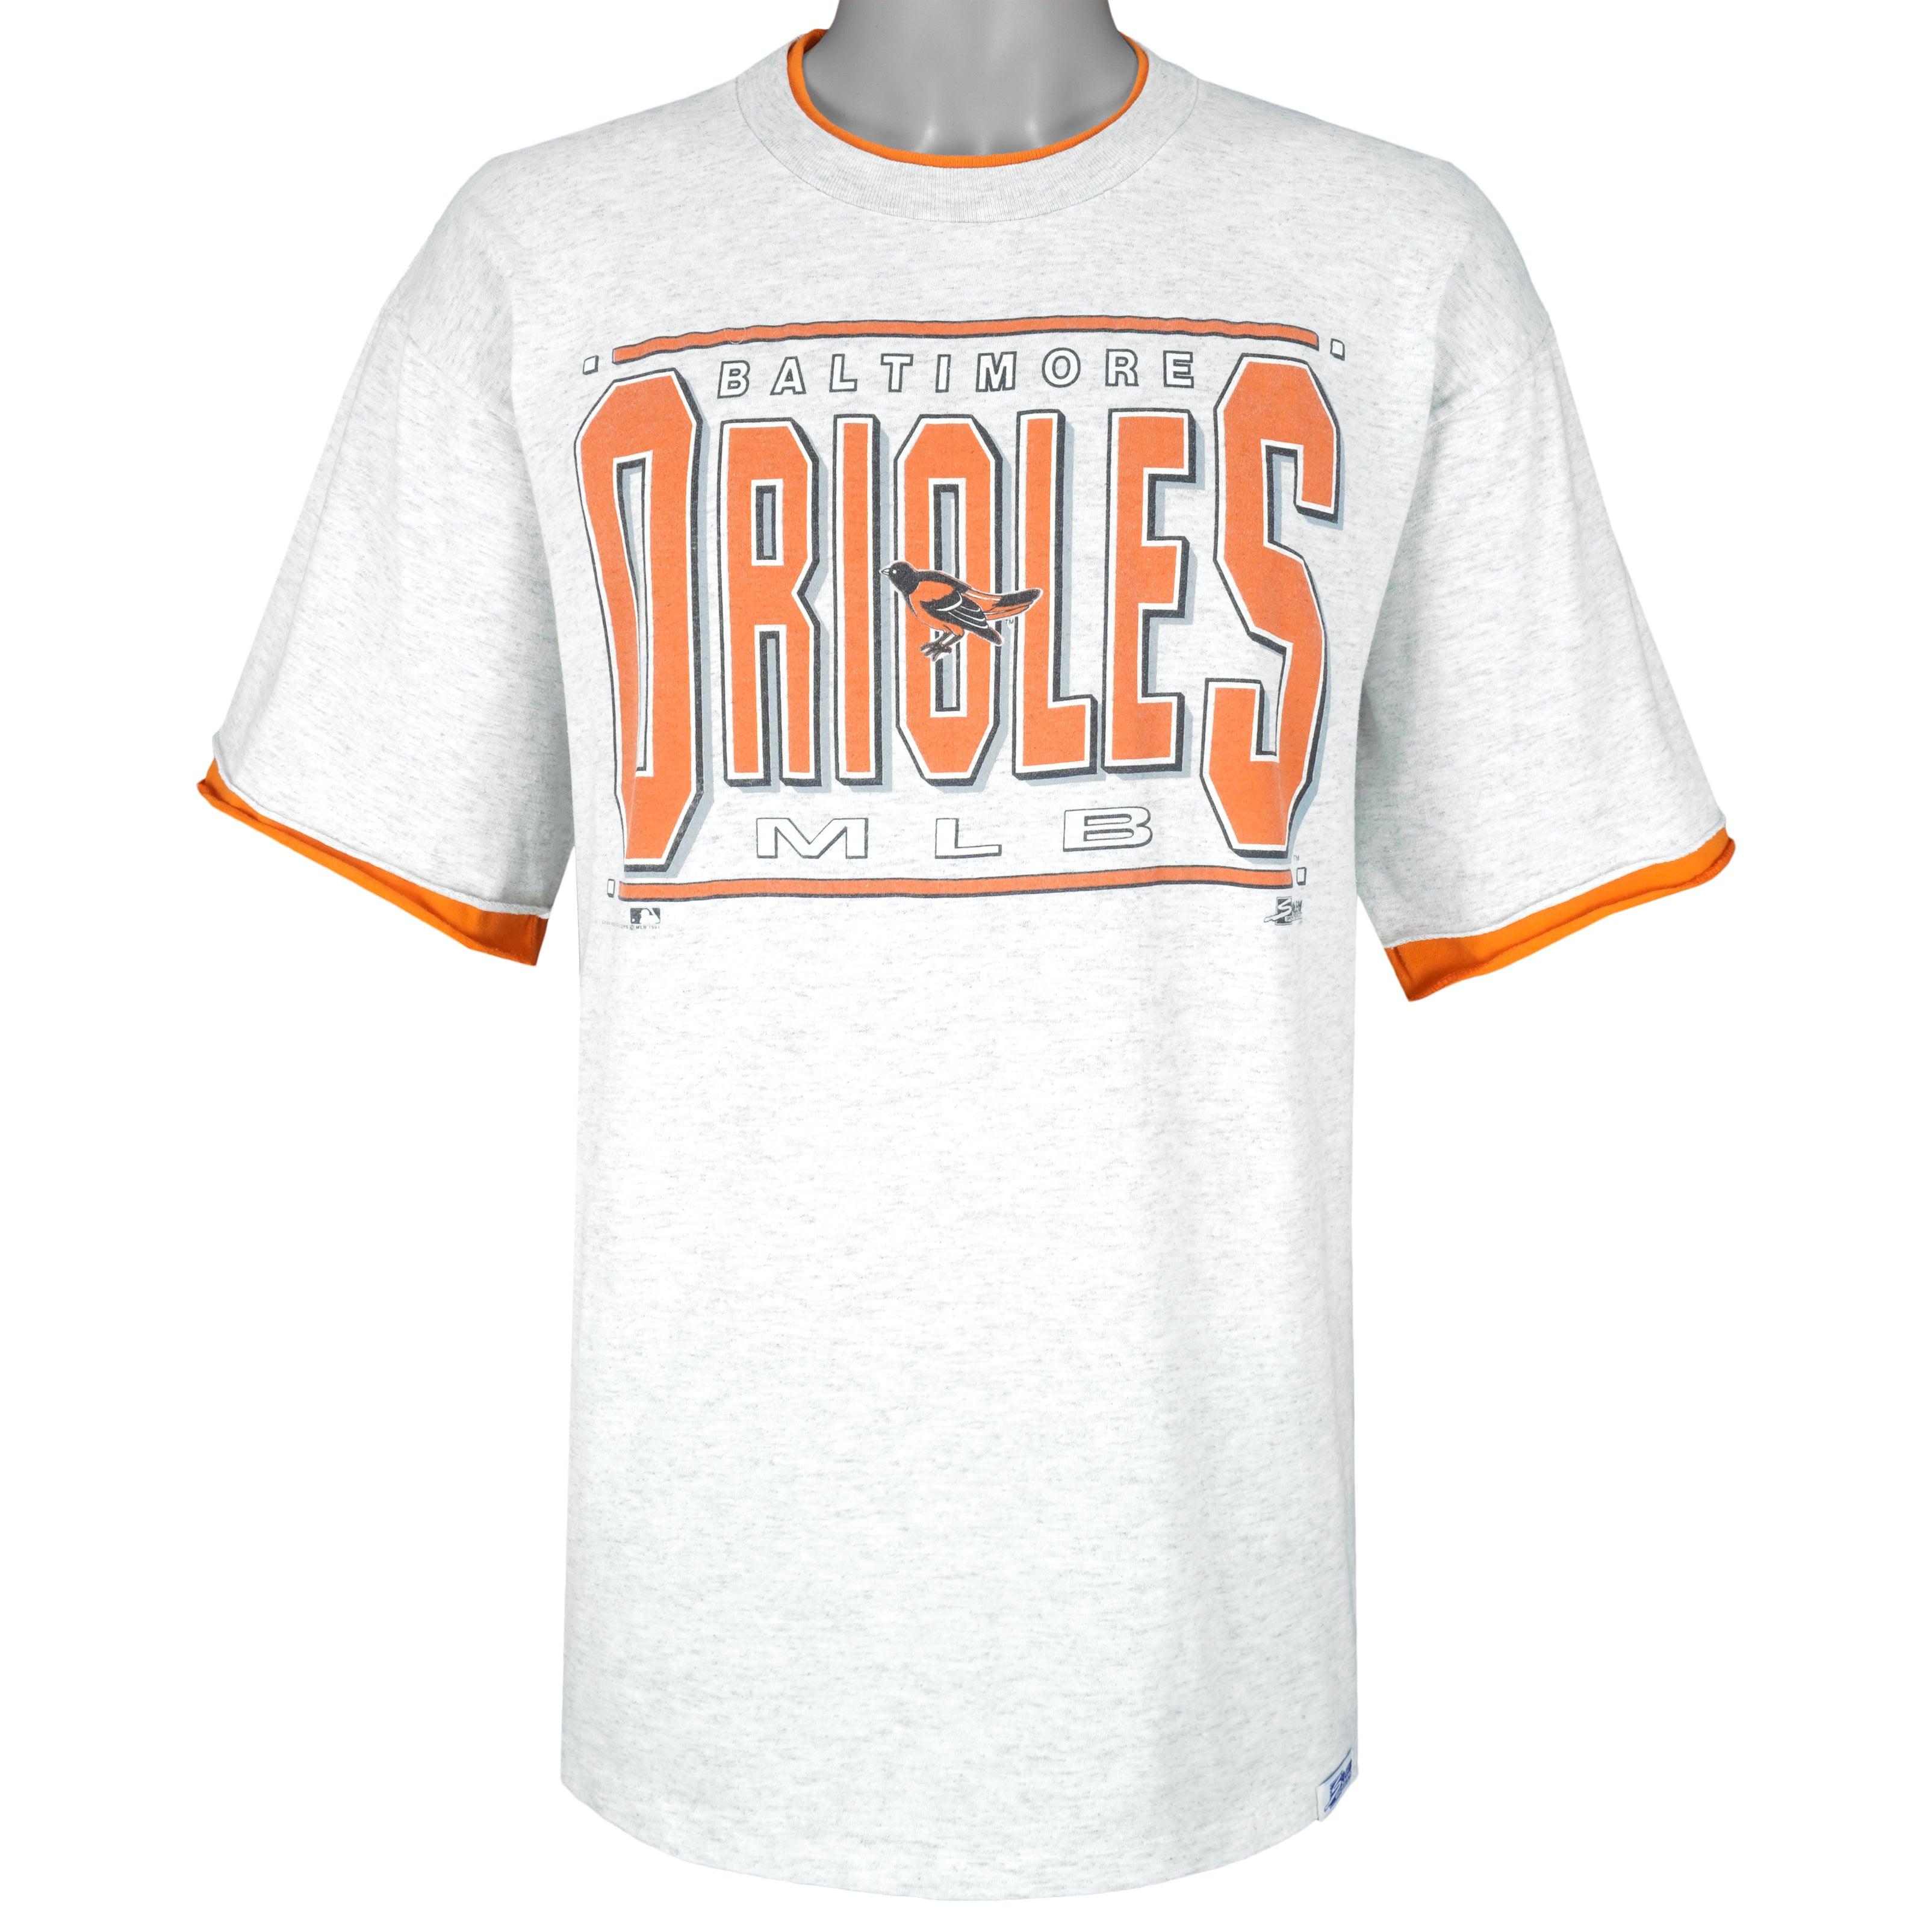 Vintage Baltimore Orioles T-Shirt 1992